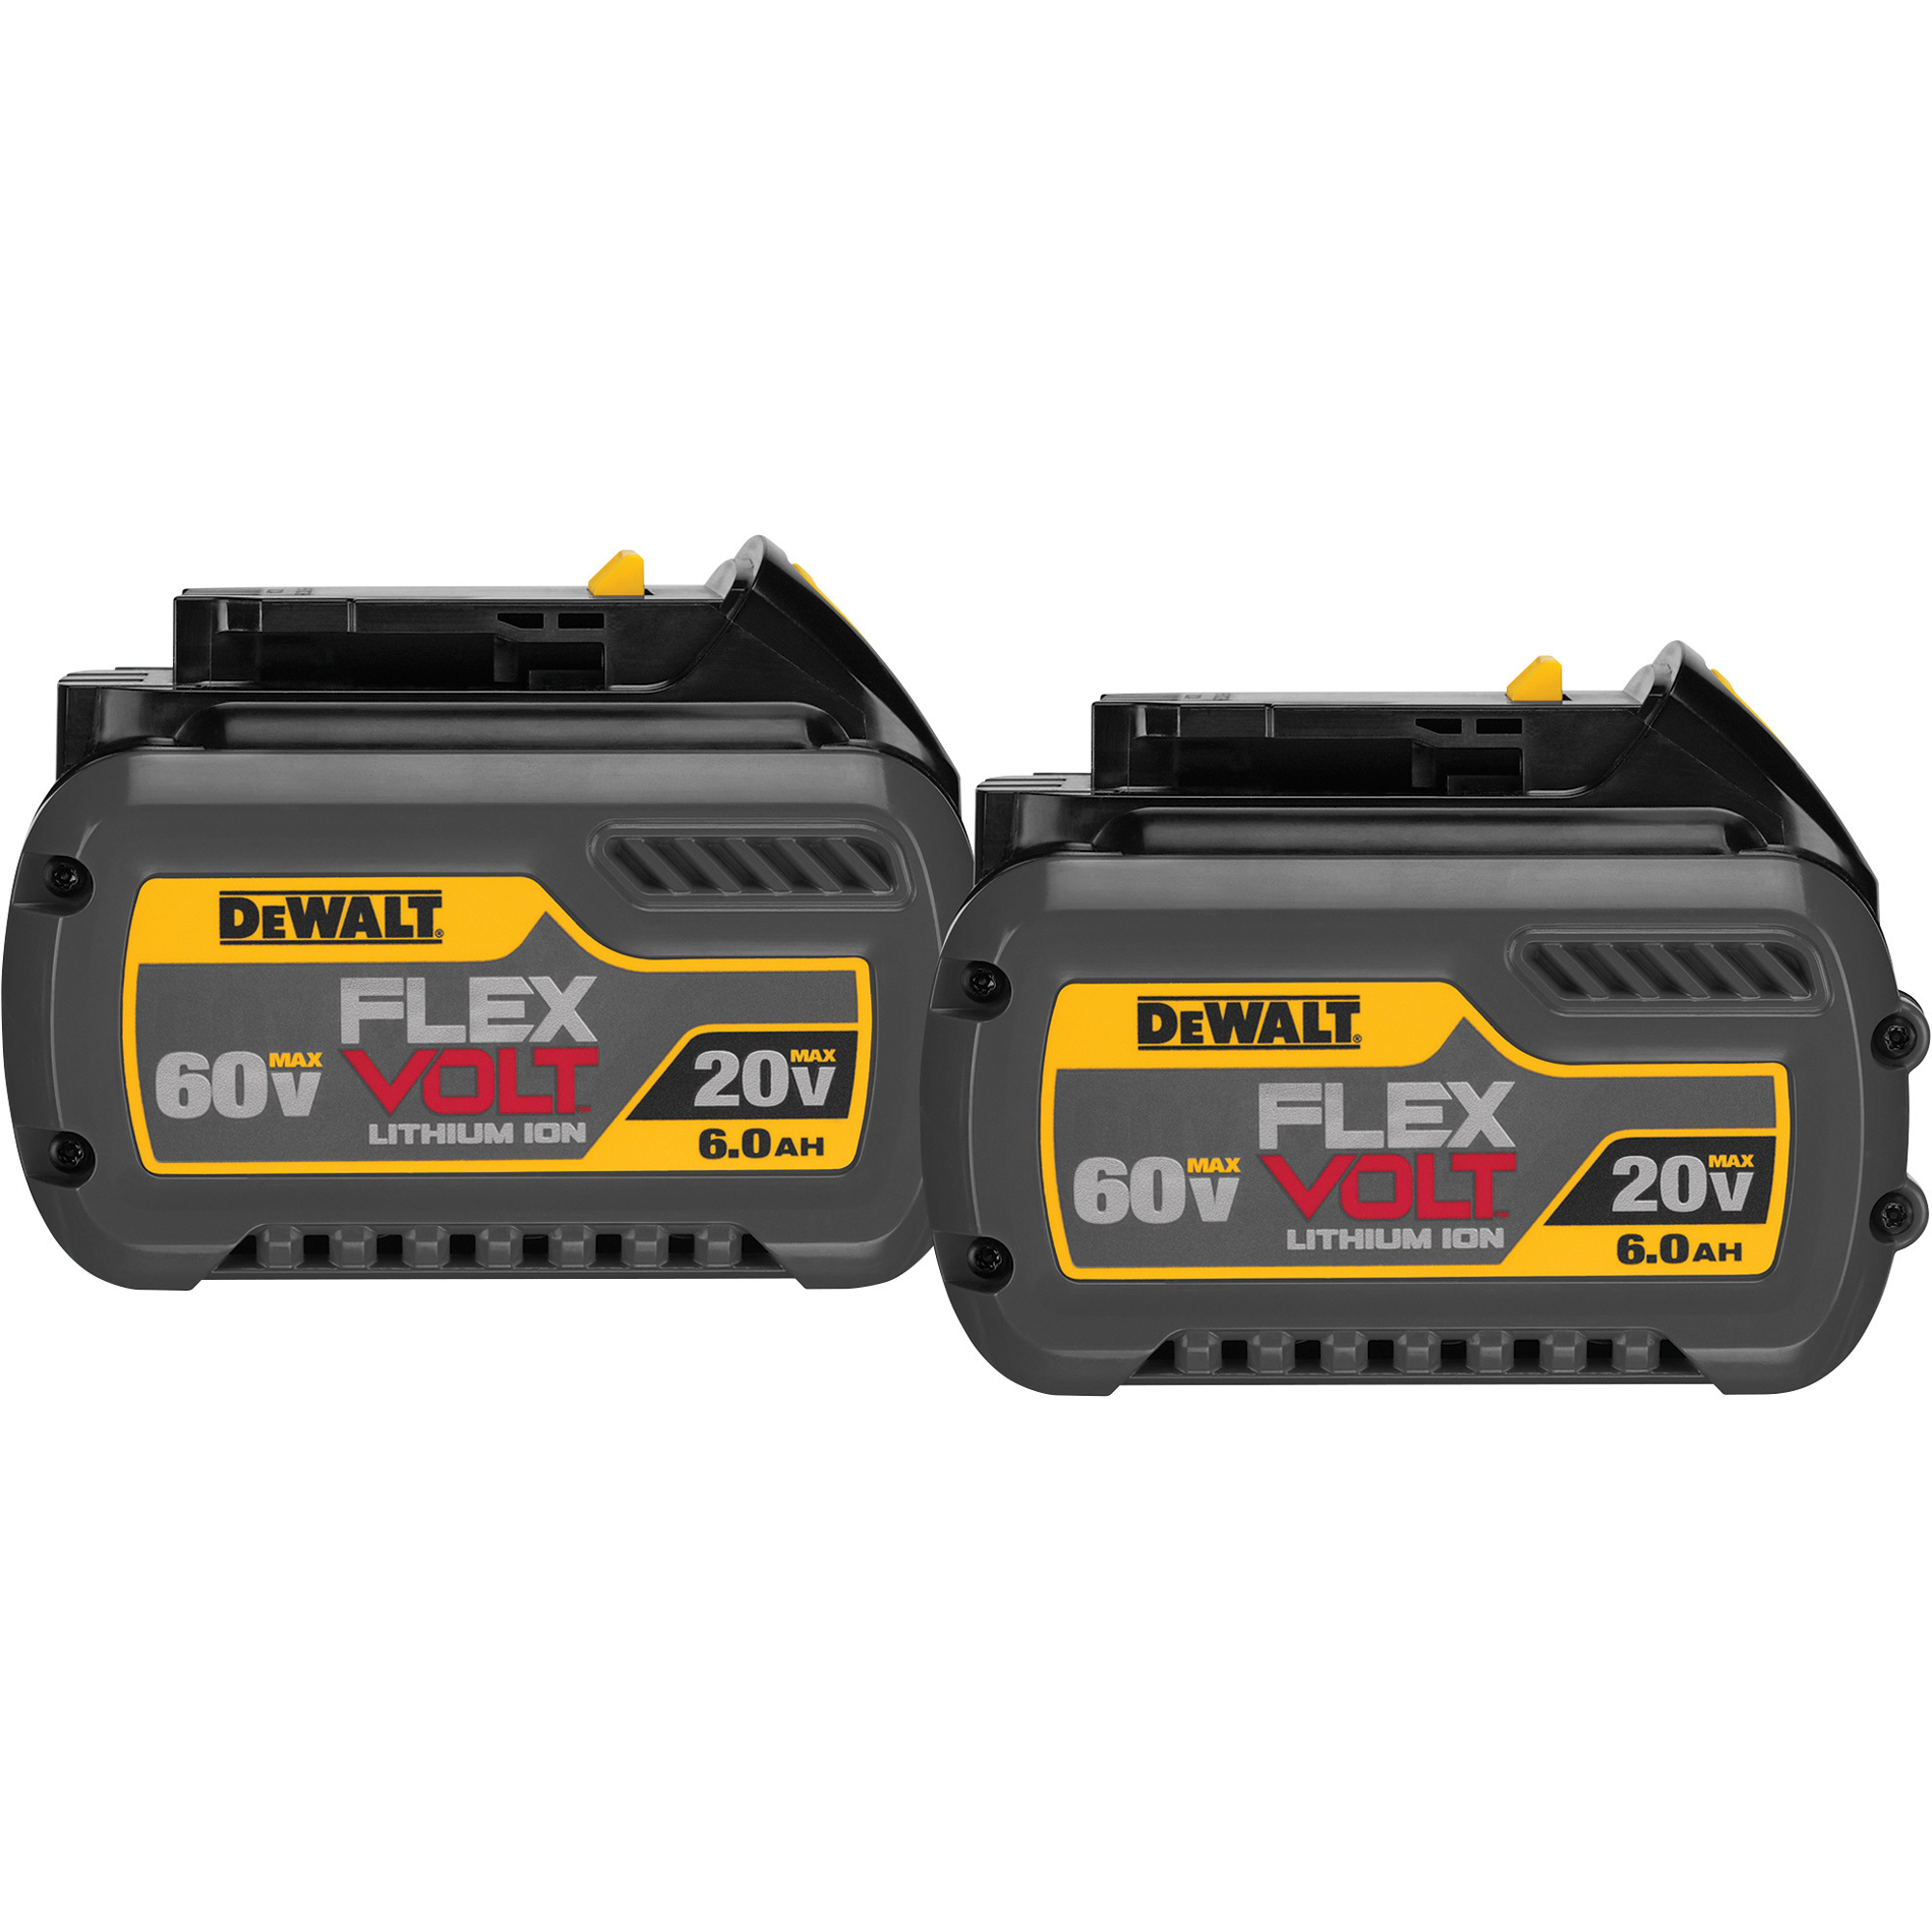 FLEXVOLT 20V/60V MAX Battery Pack — 6.0Ah, Model - DEWALT DCB606-2